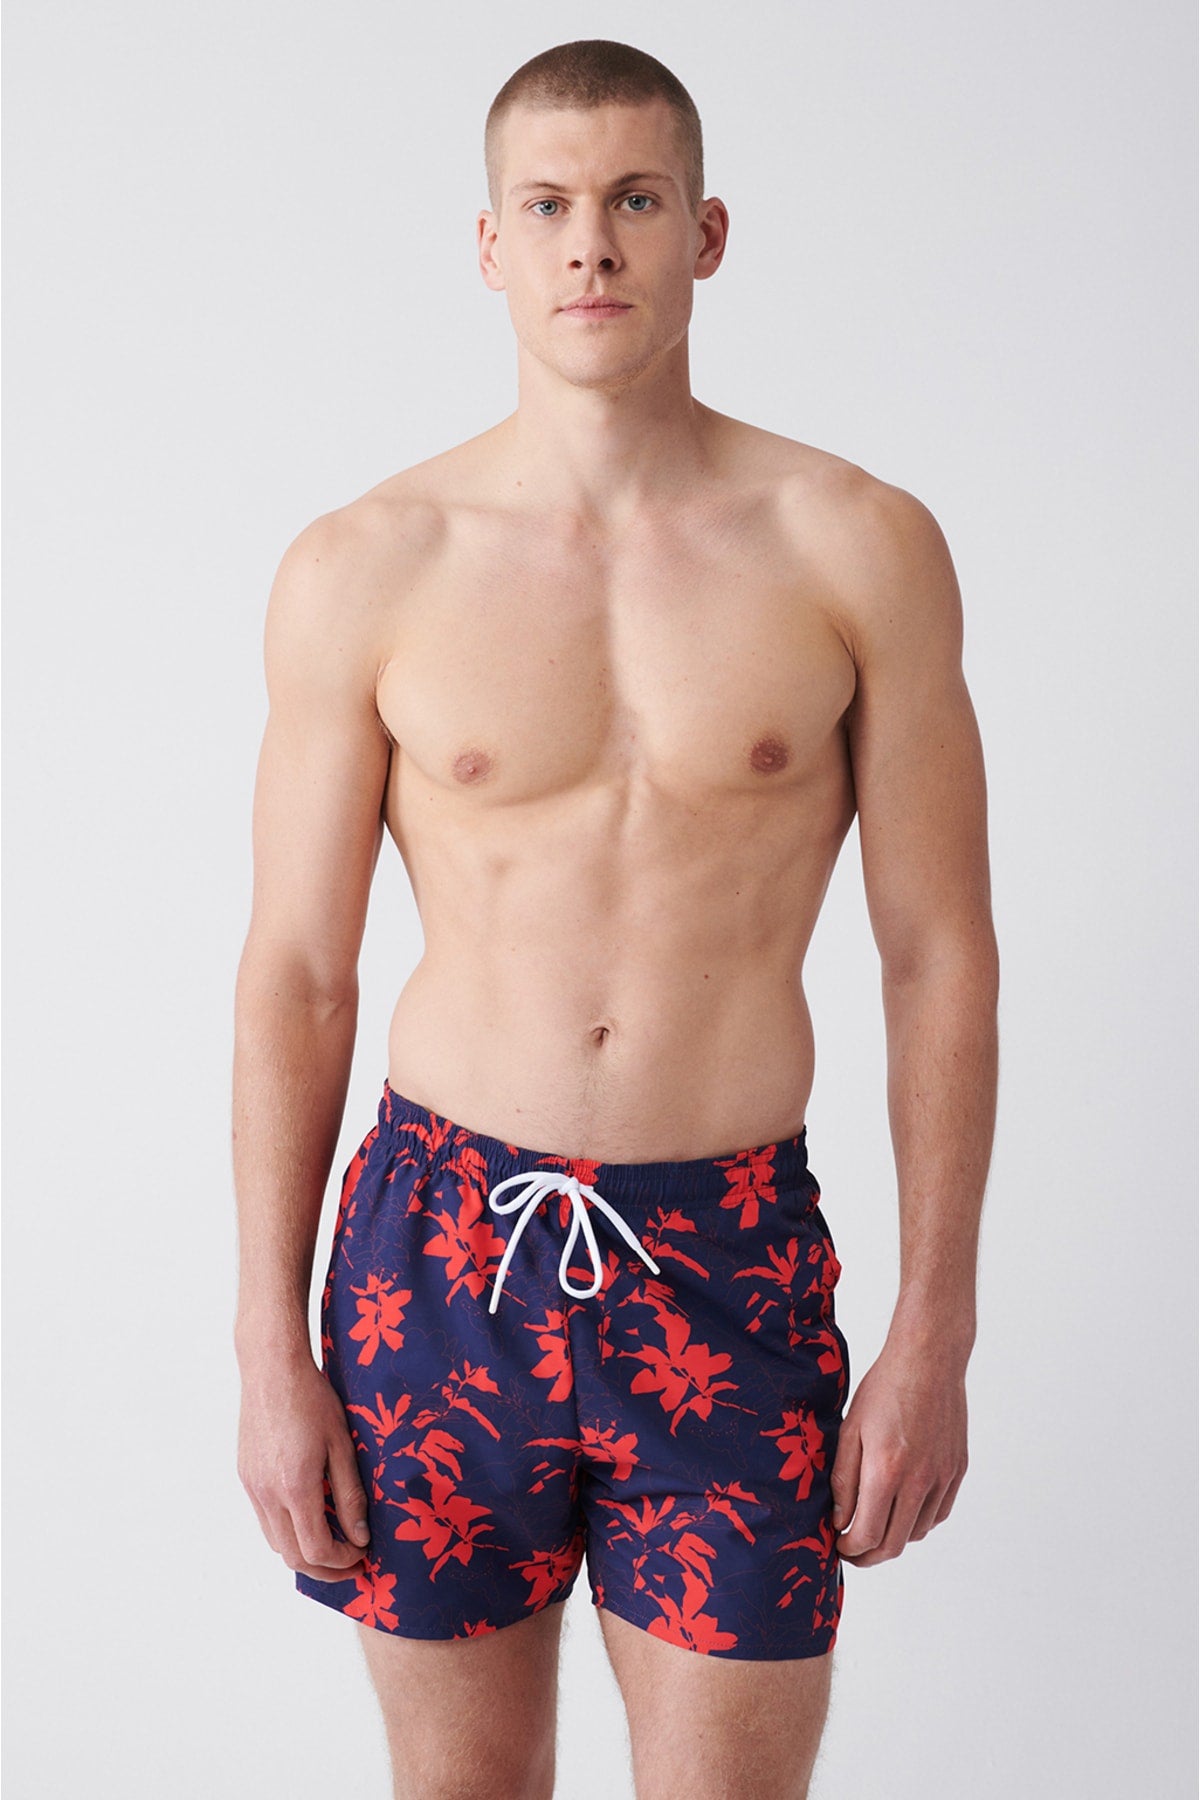 Men's Navy Blue-Red Quick Dry Printed Standard Size Swimwear Marine Shorts E003802